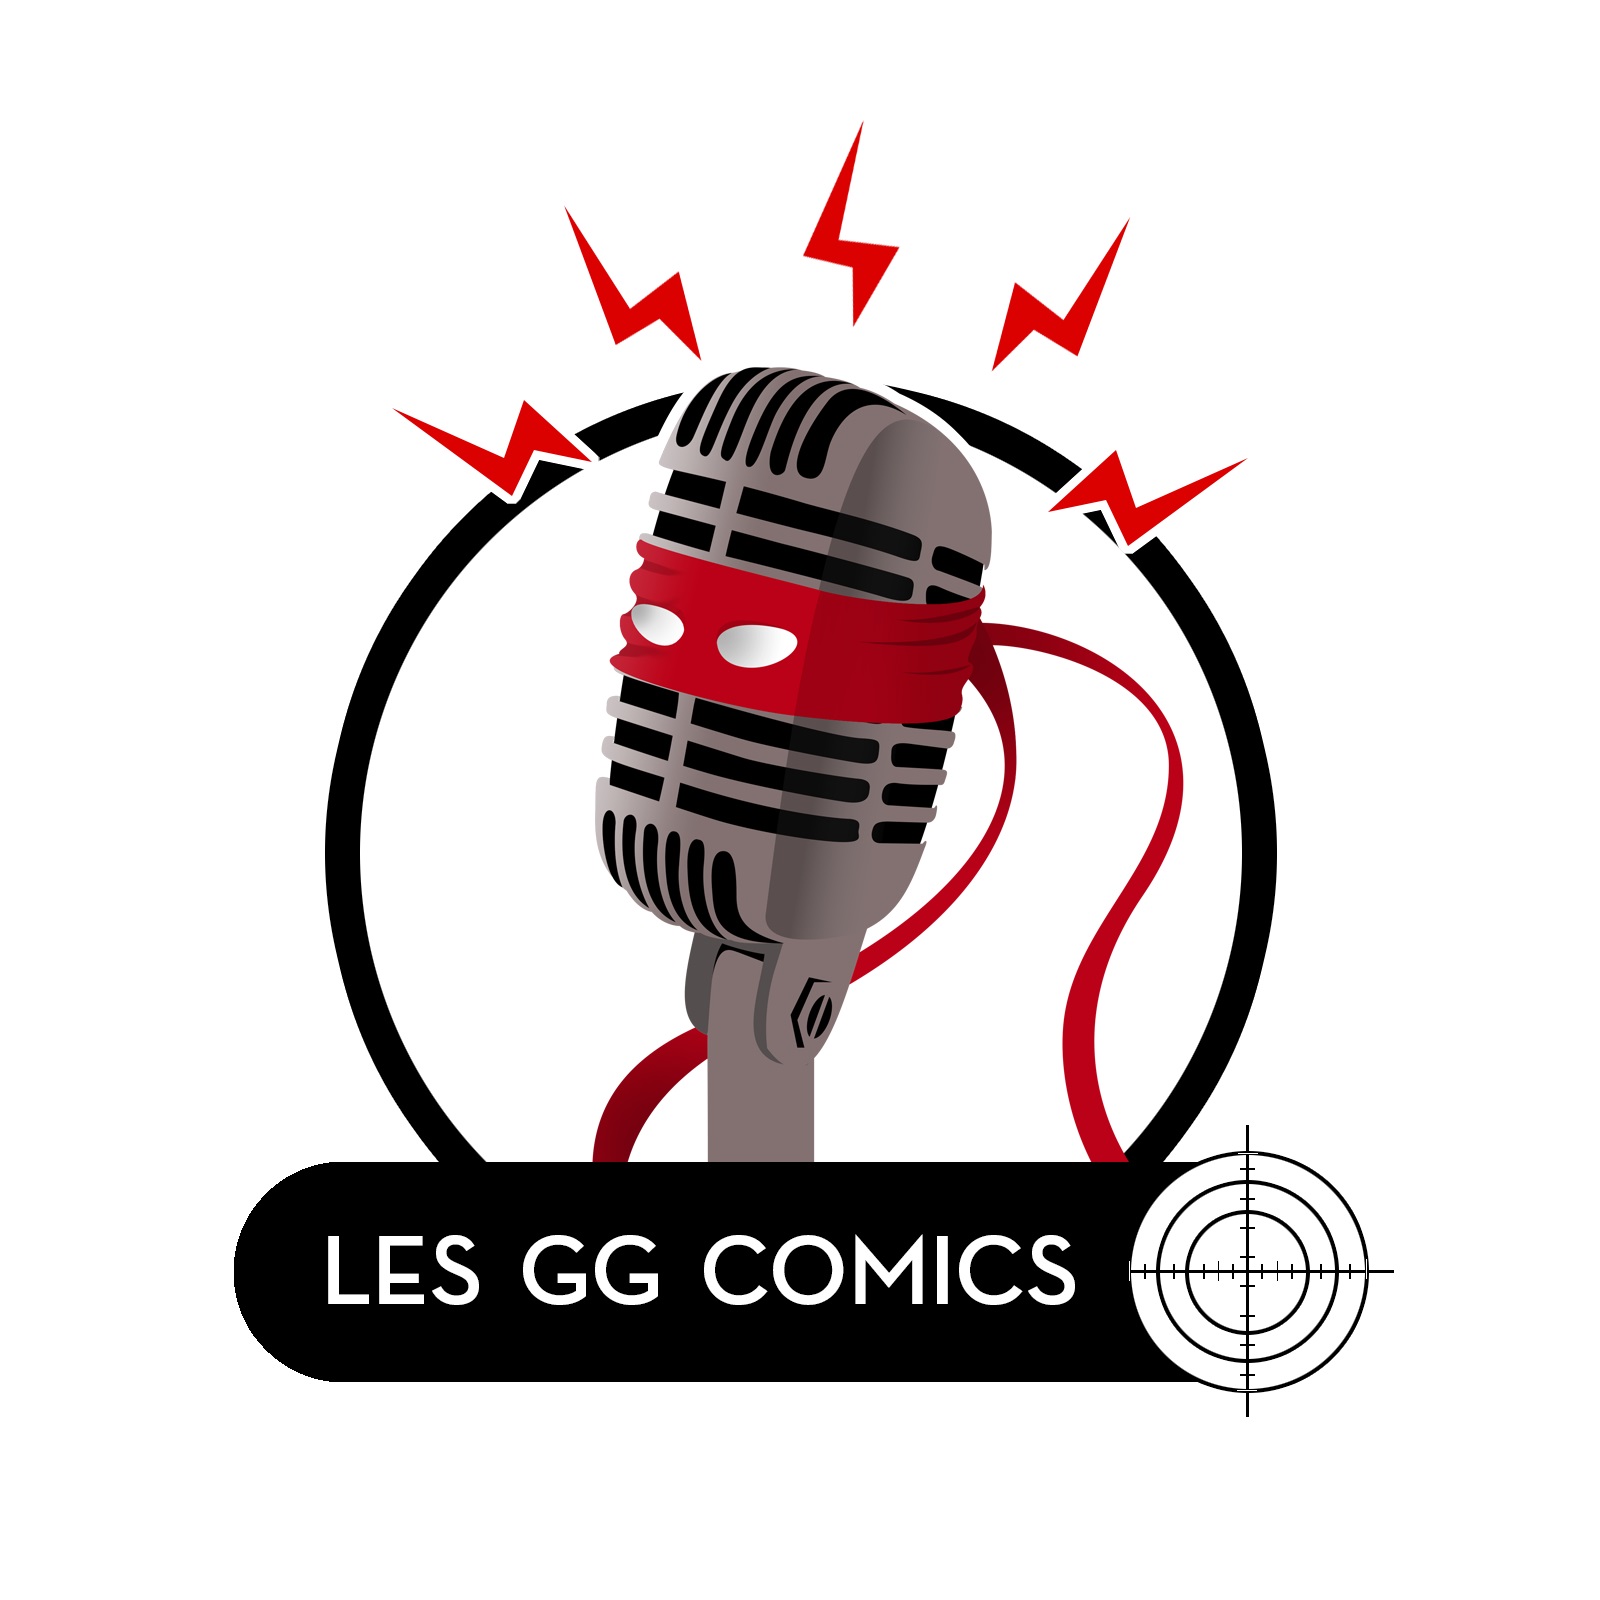 Les GG comics #050 : Si j’étais scénariste…